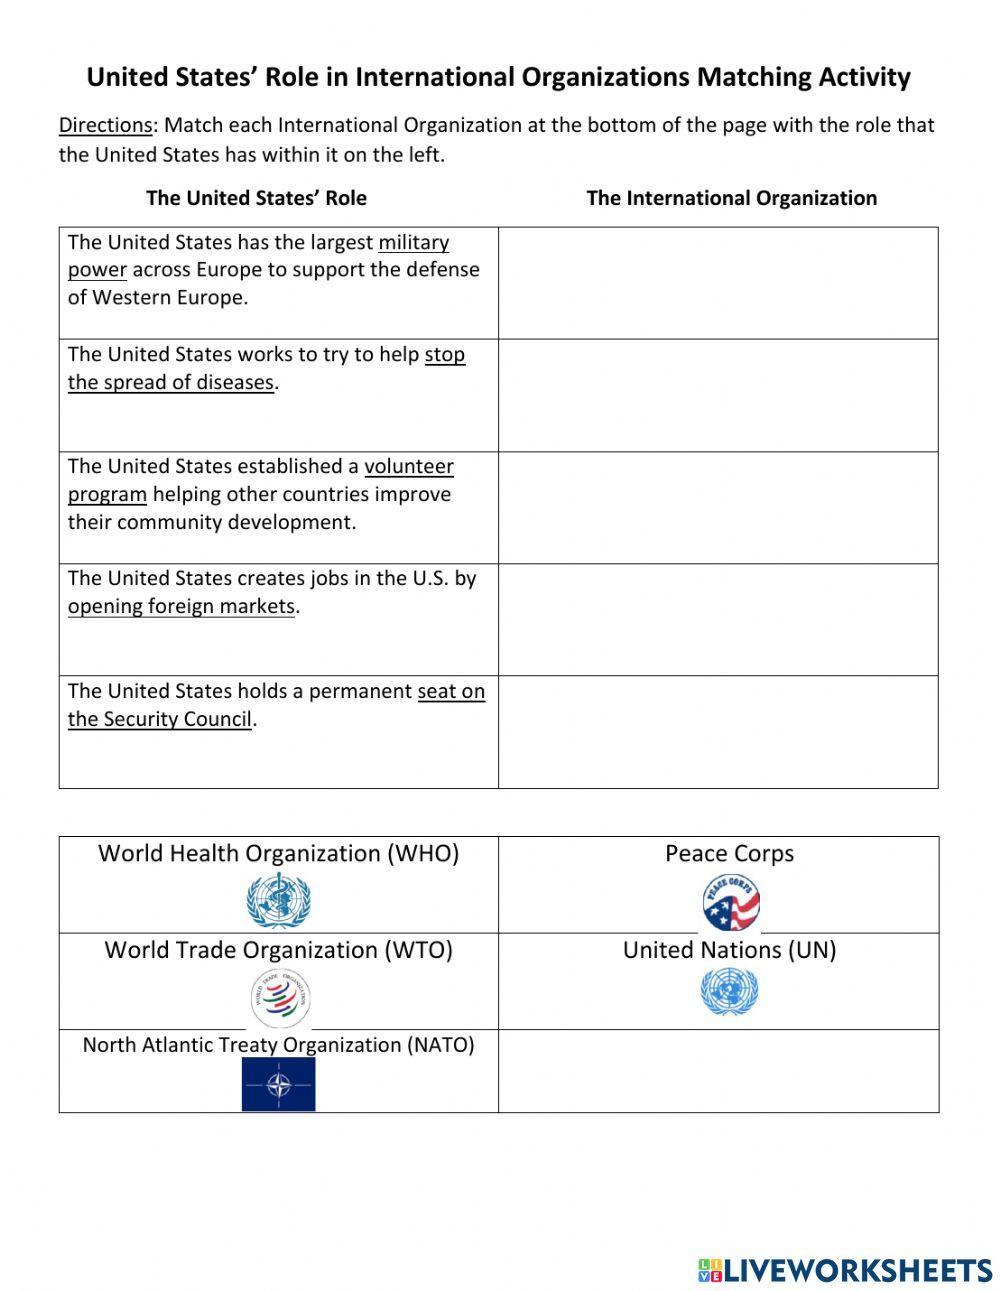 Unit 9B US Role in International Organizations Matching Activity